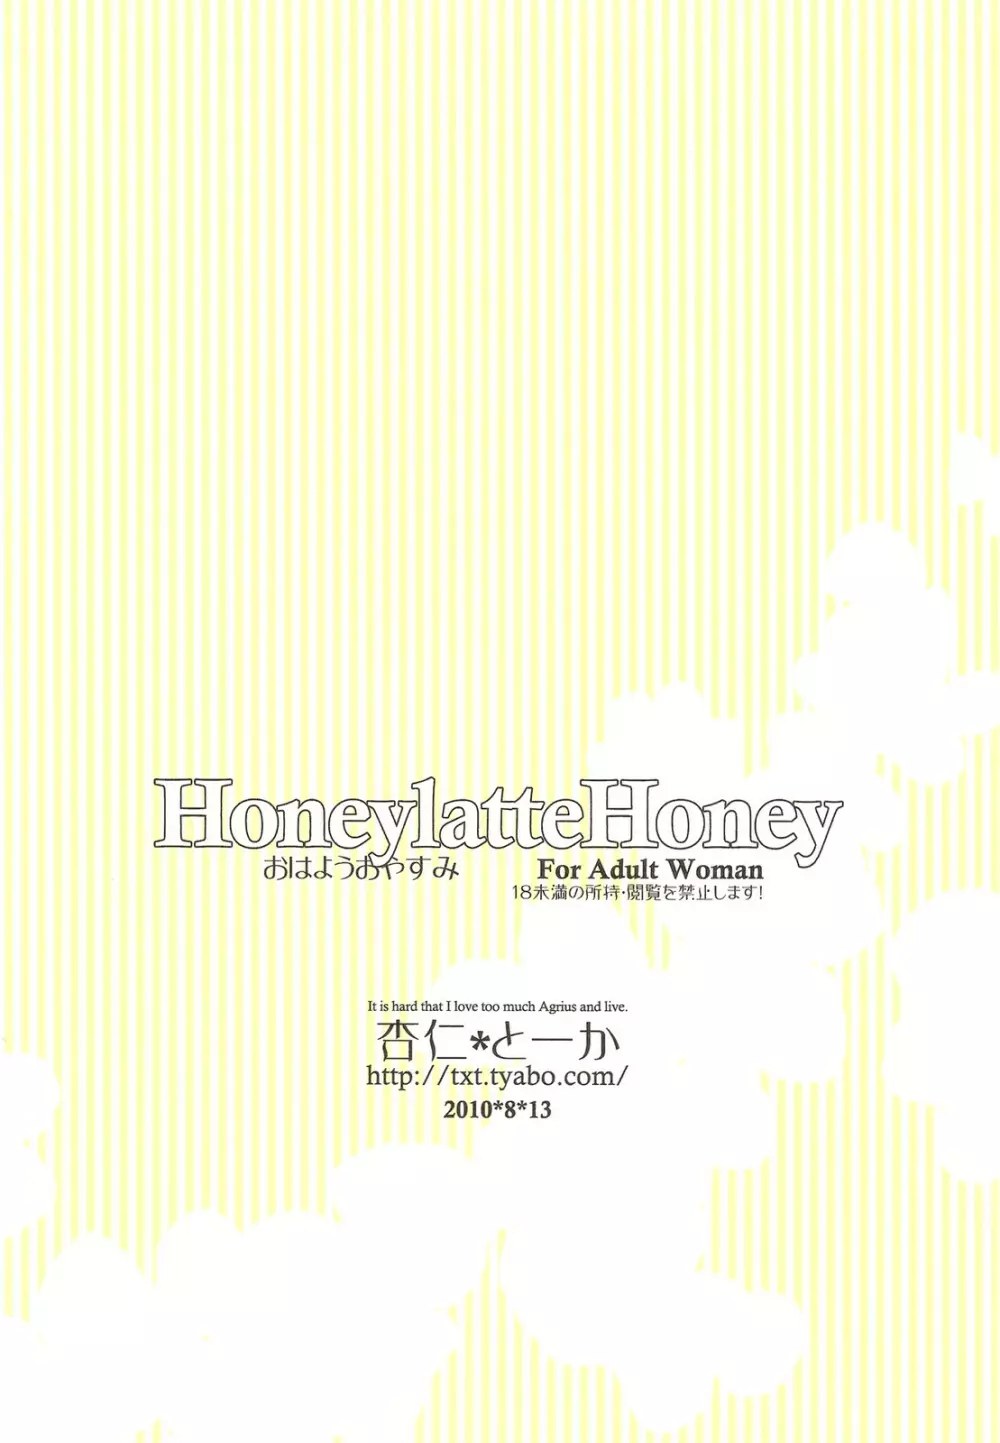 HoneylatteHoney おはようおやすみ + おまけ本 30ページ